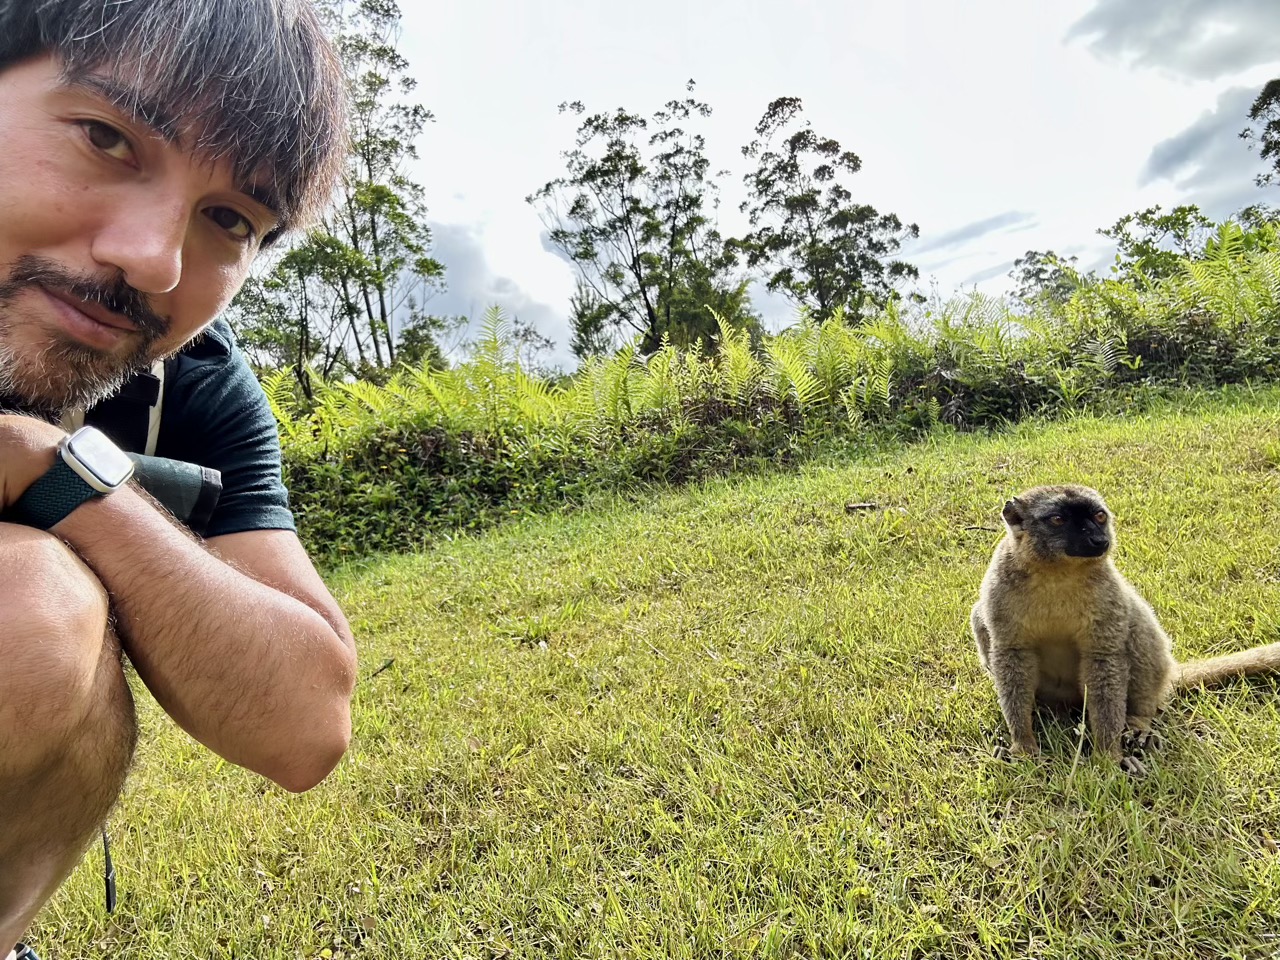 Selfie with a lemur, part iii